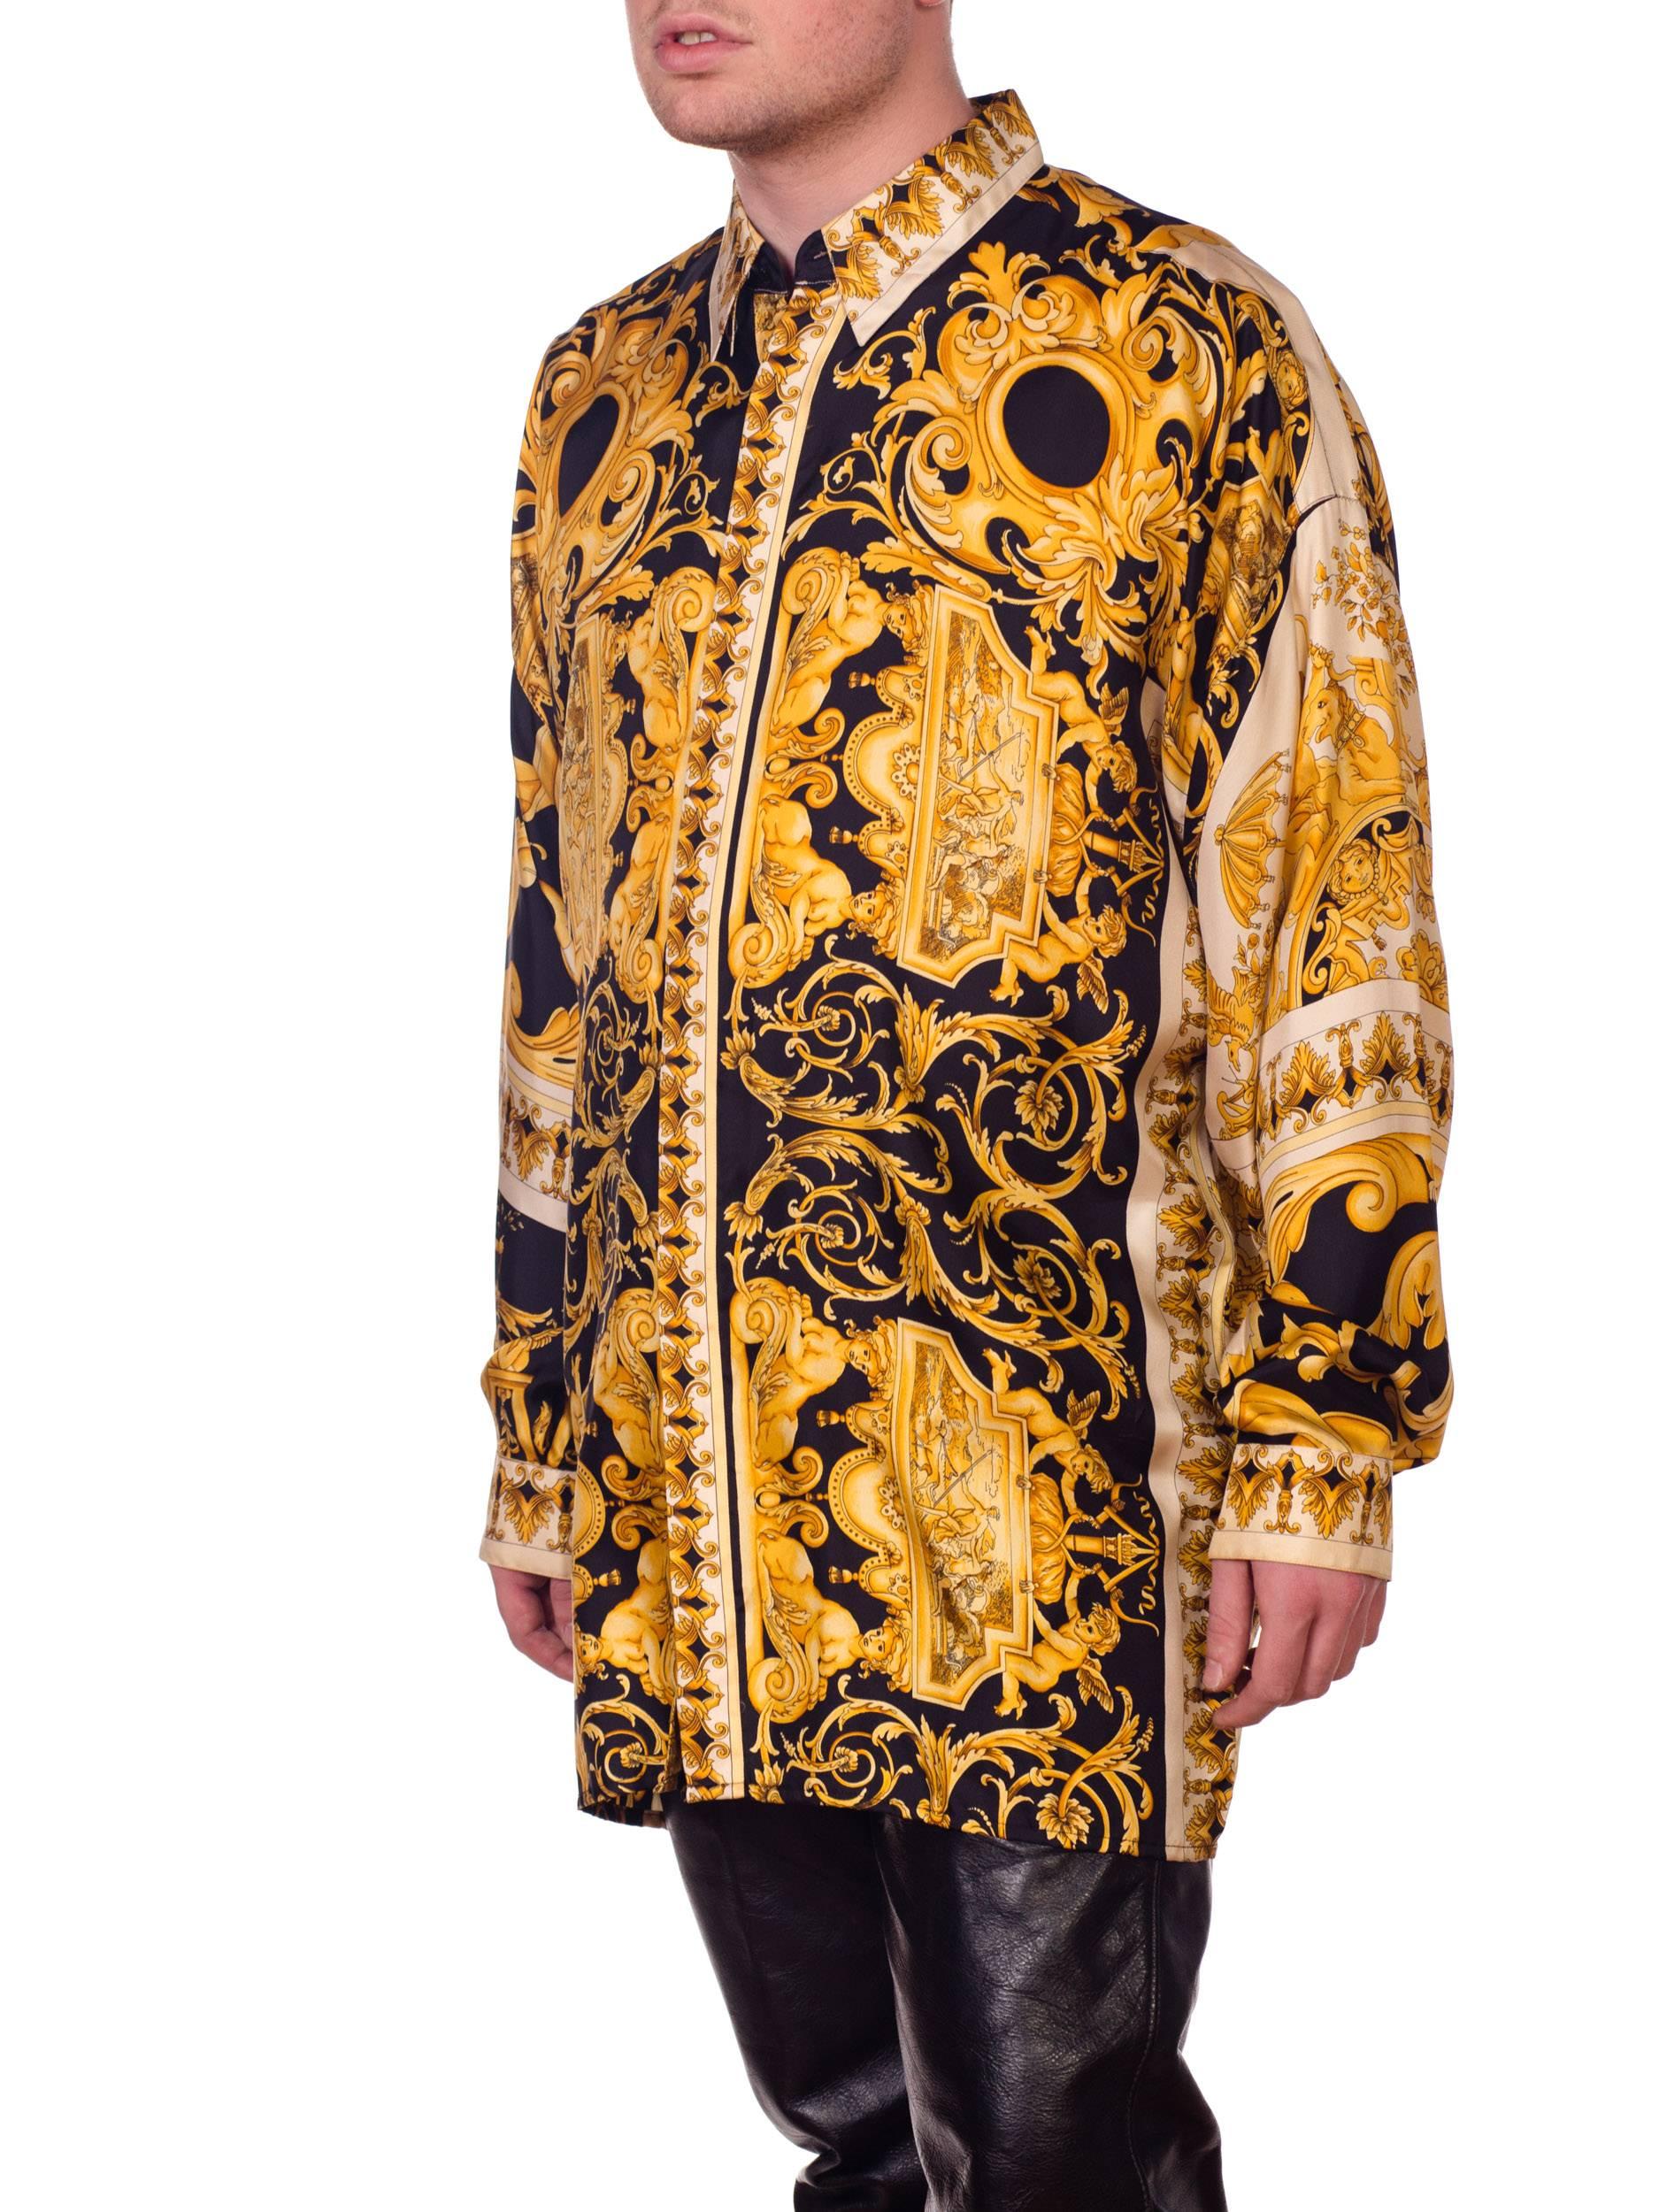 Atelier Gianni Versace Silk Gold Filigree Shirt, 1990s  1